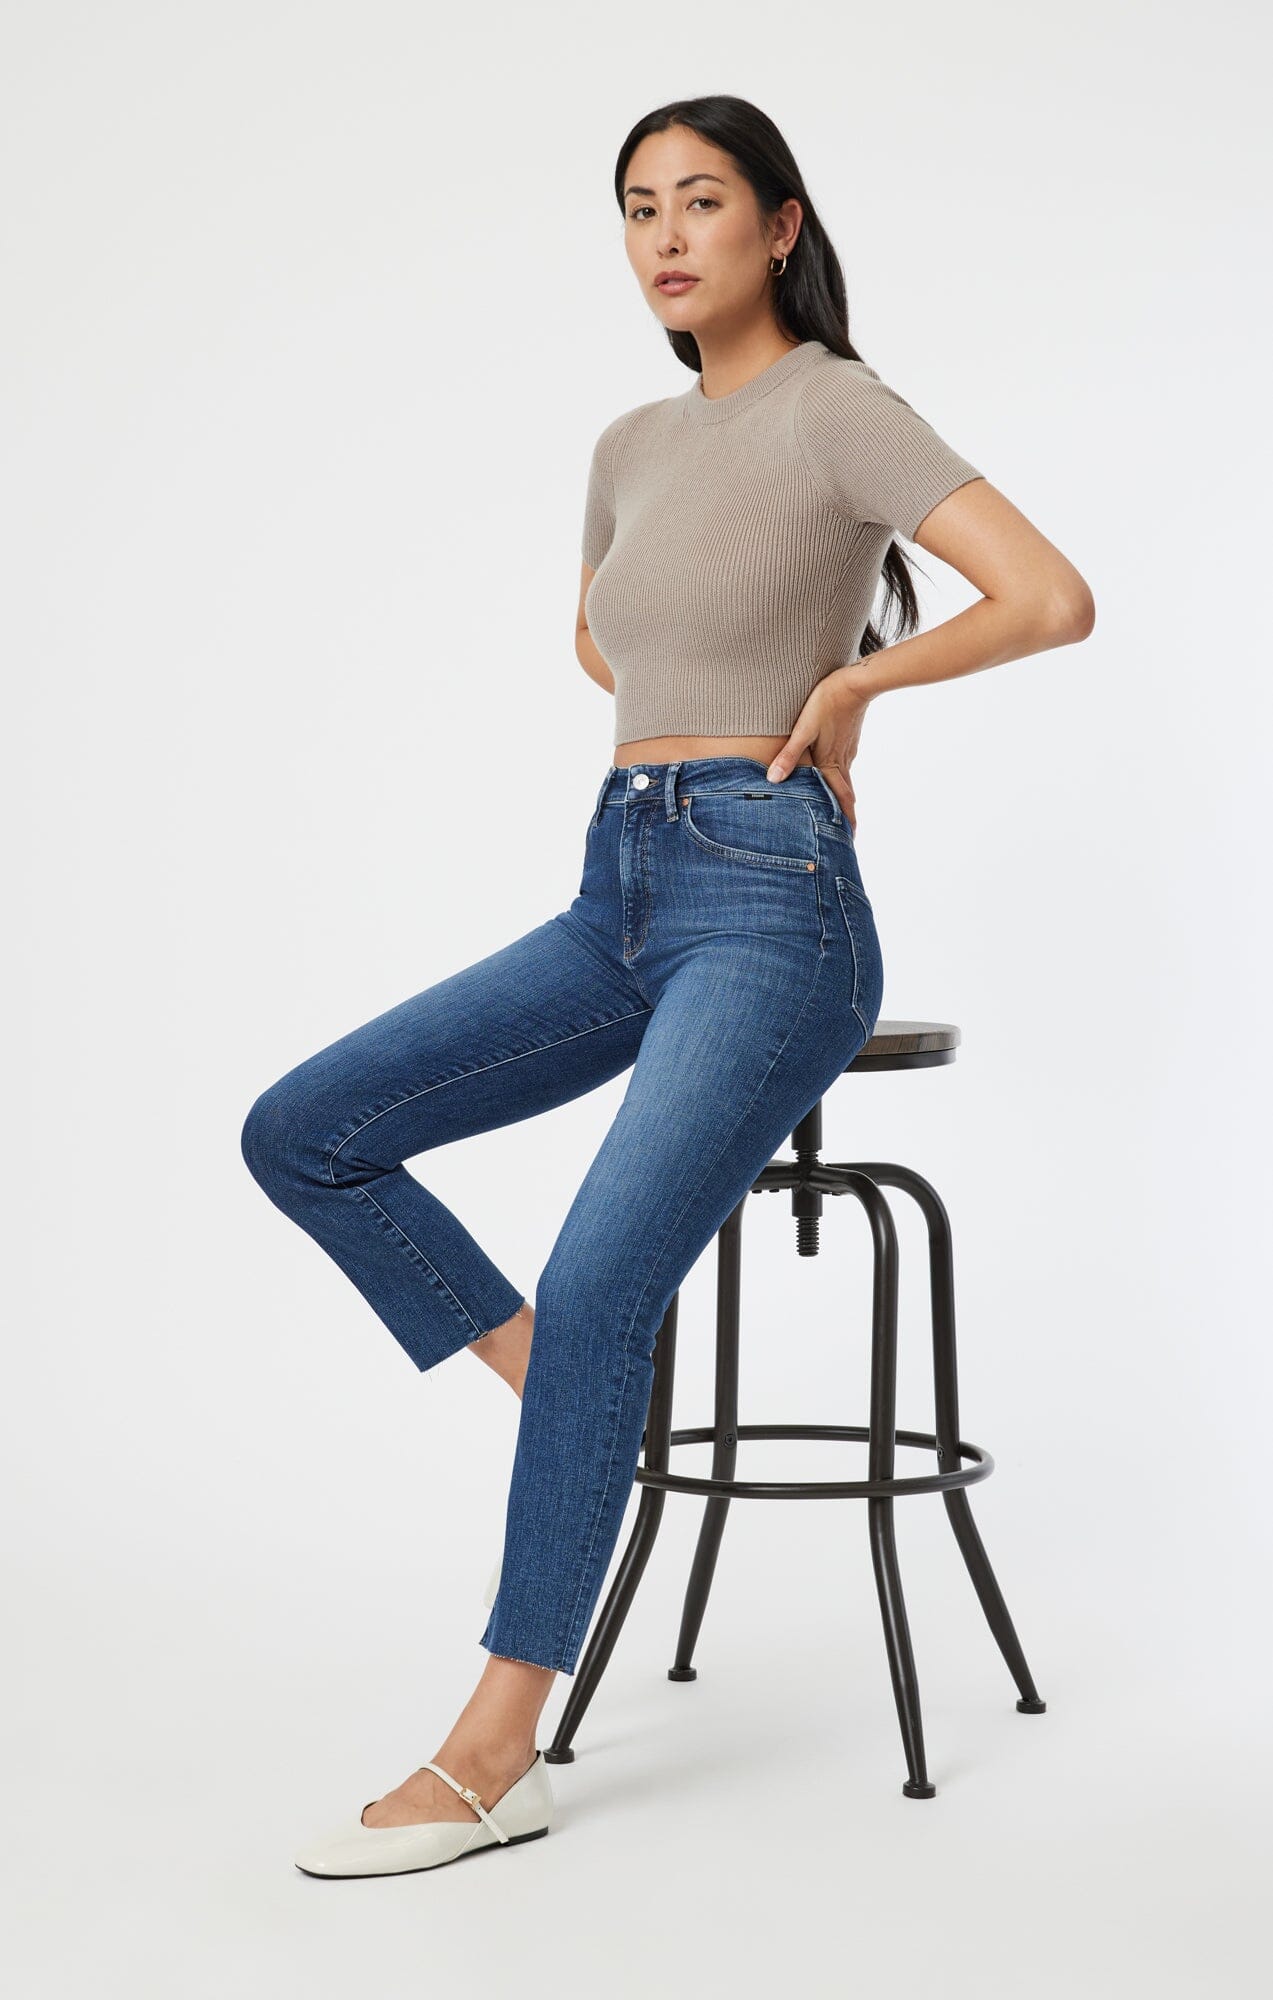 High Waist Jeans - High Rise Jeans for Women